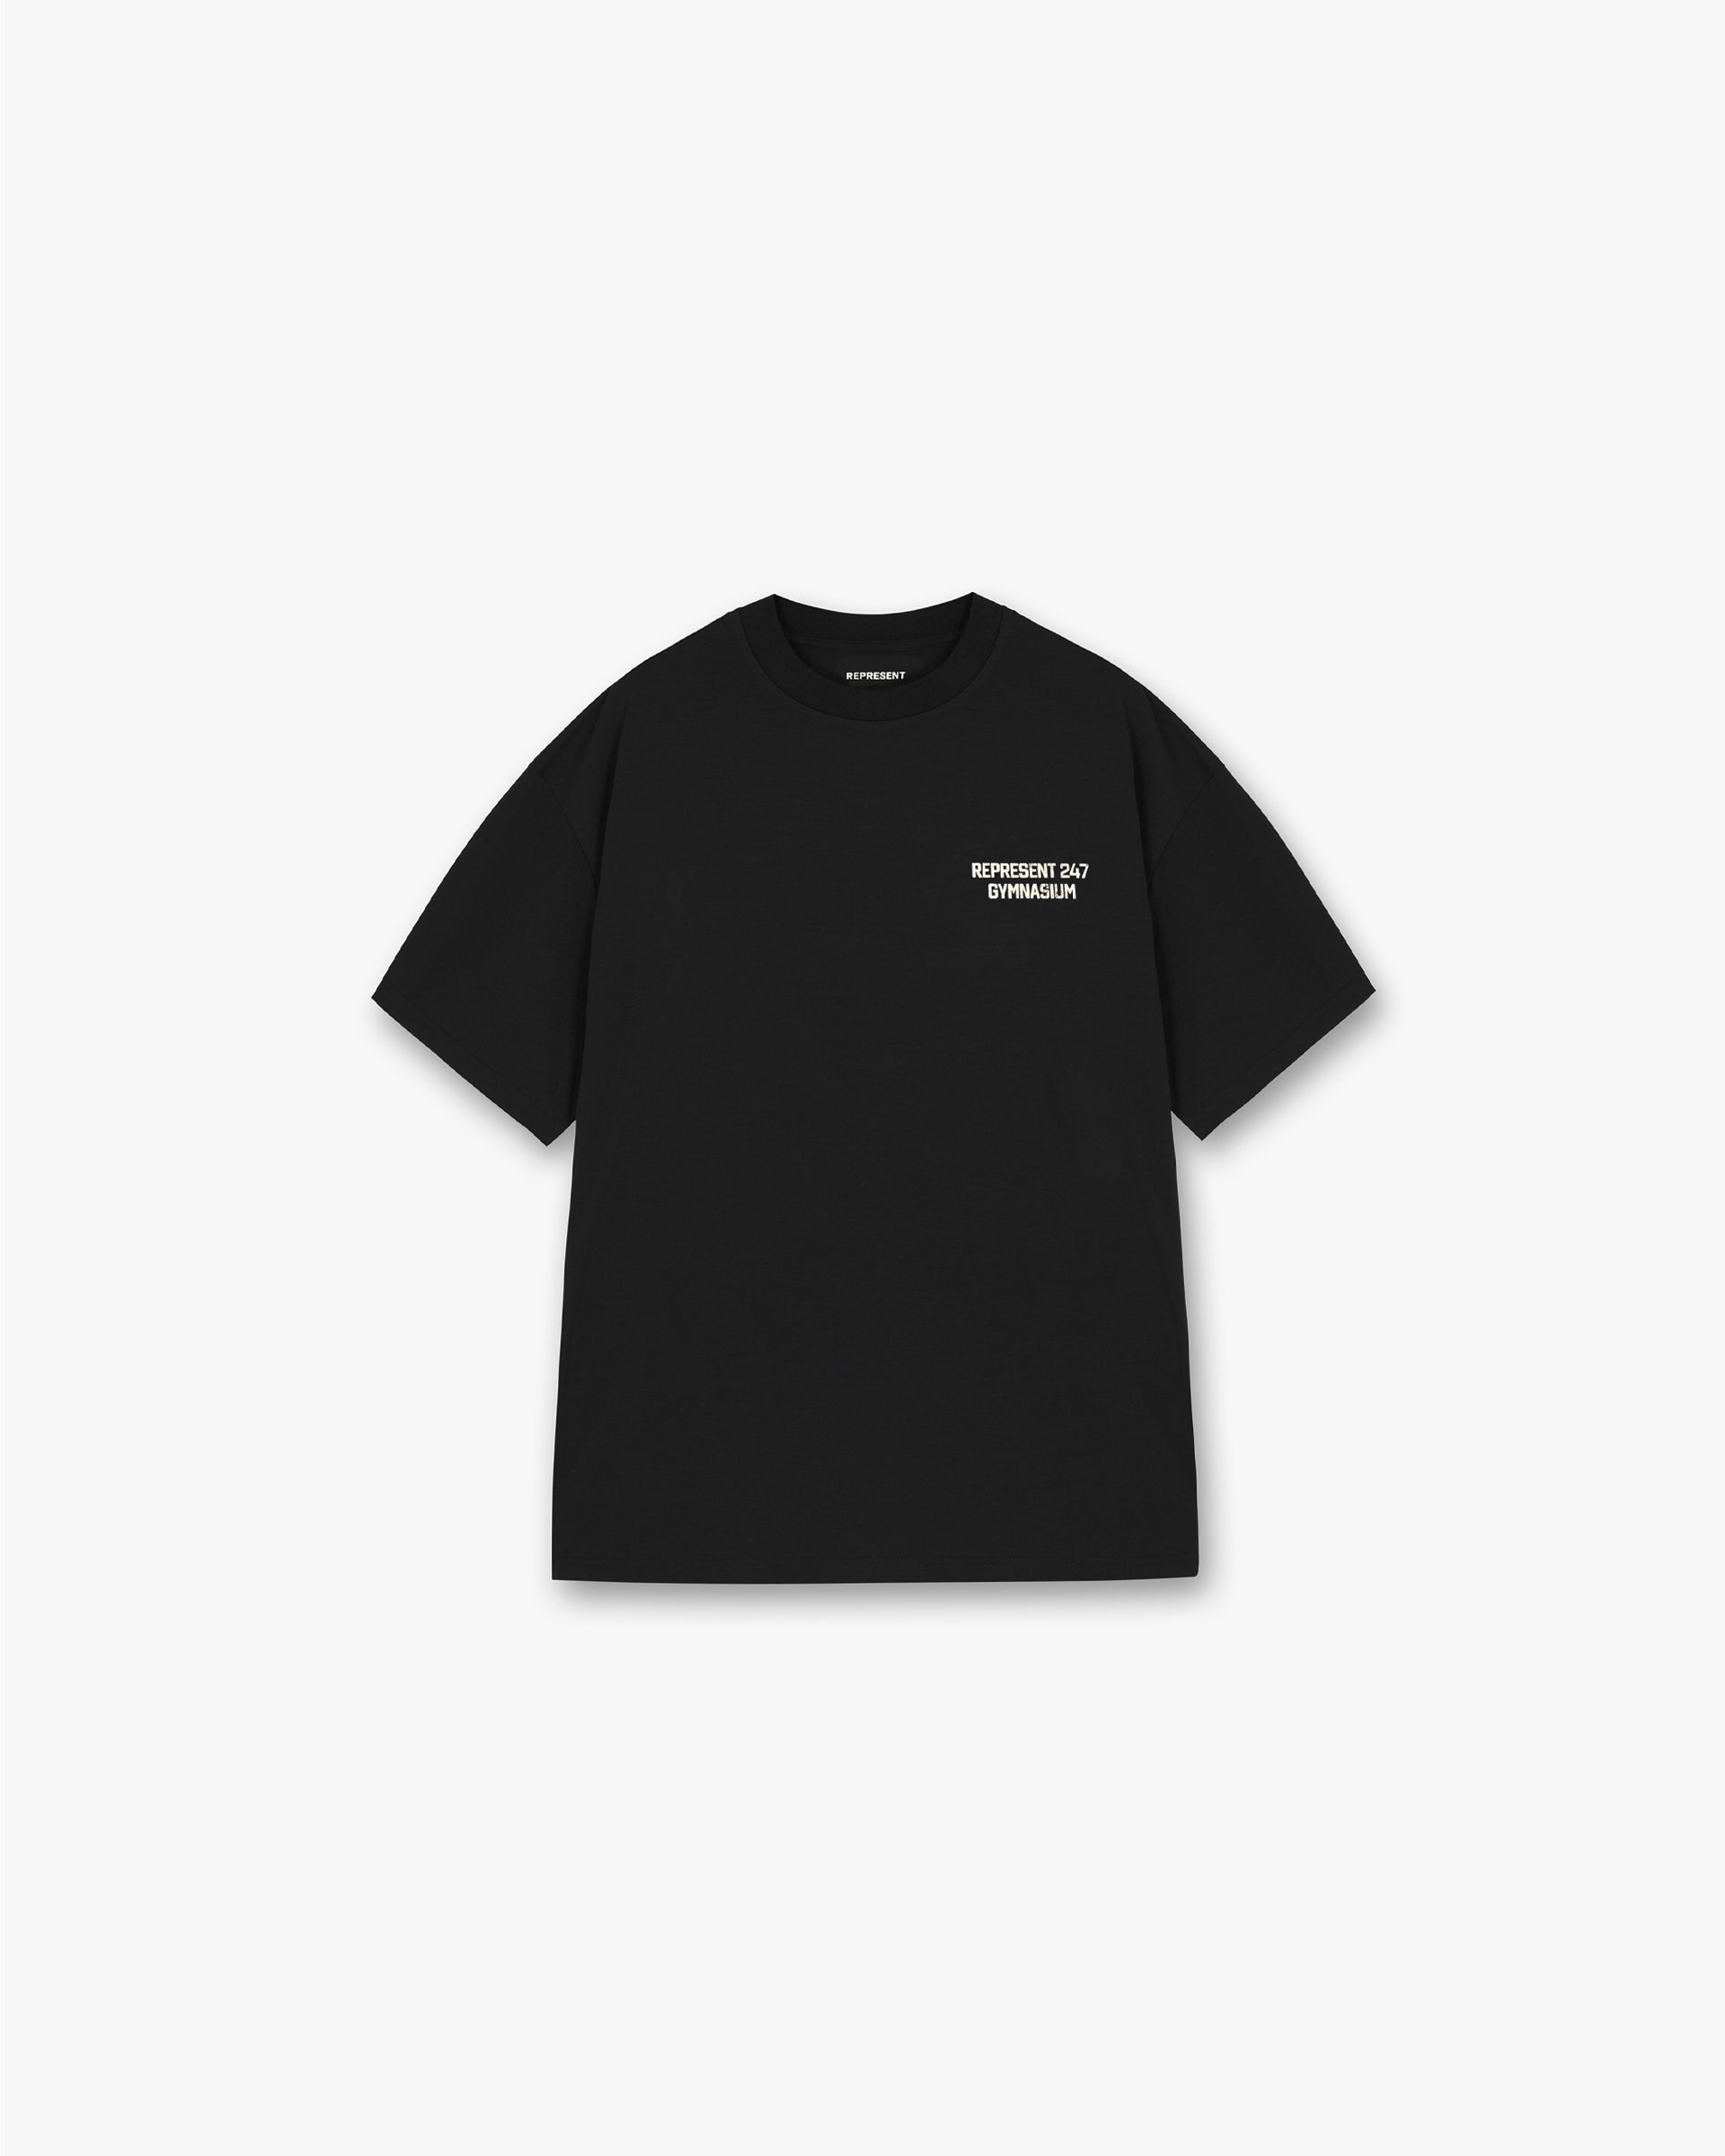 247 Gymnasium T-Shirt - Off Black